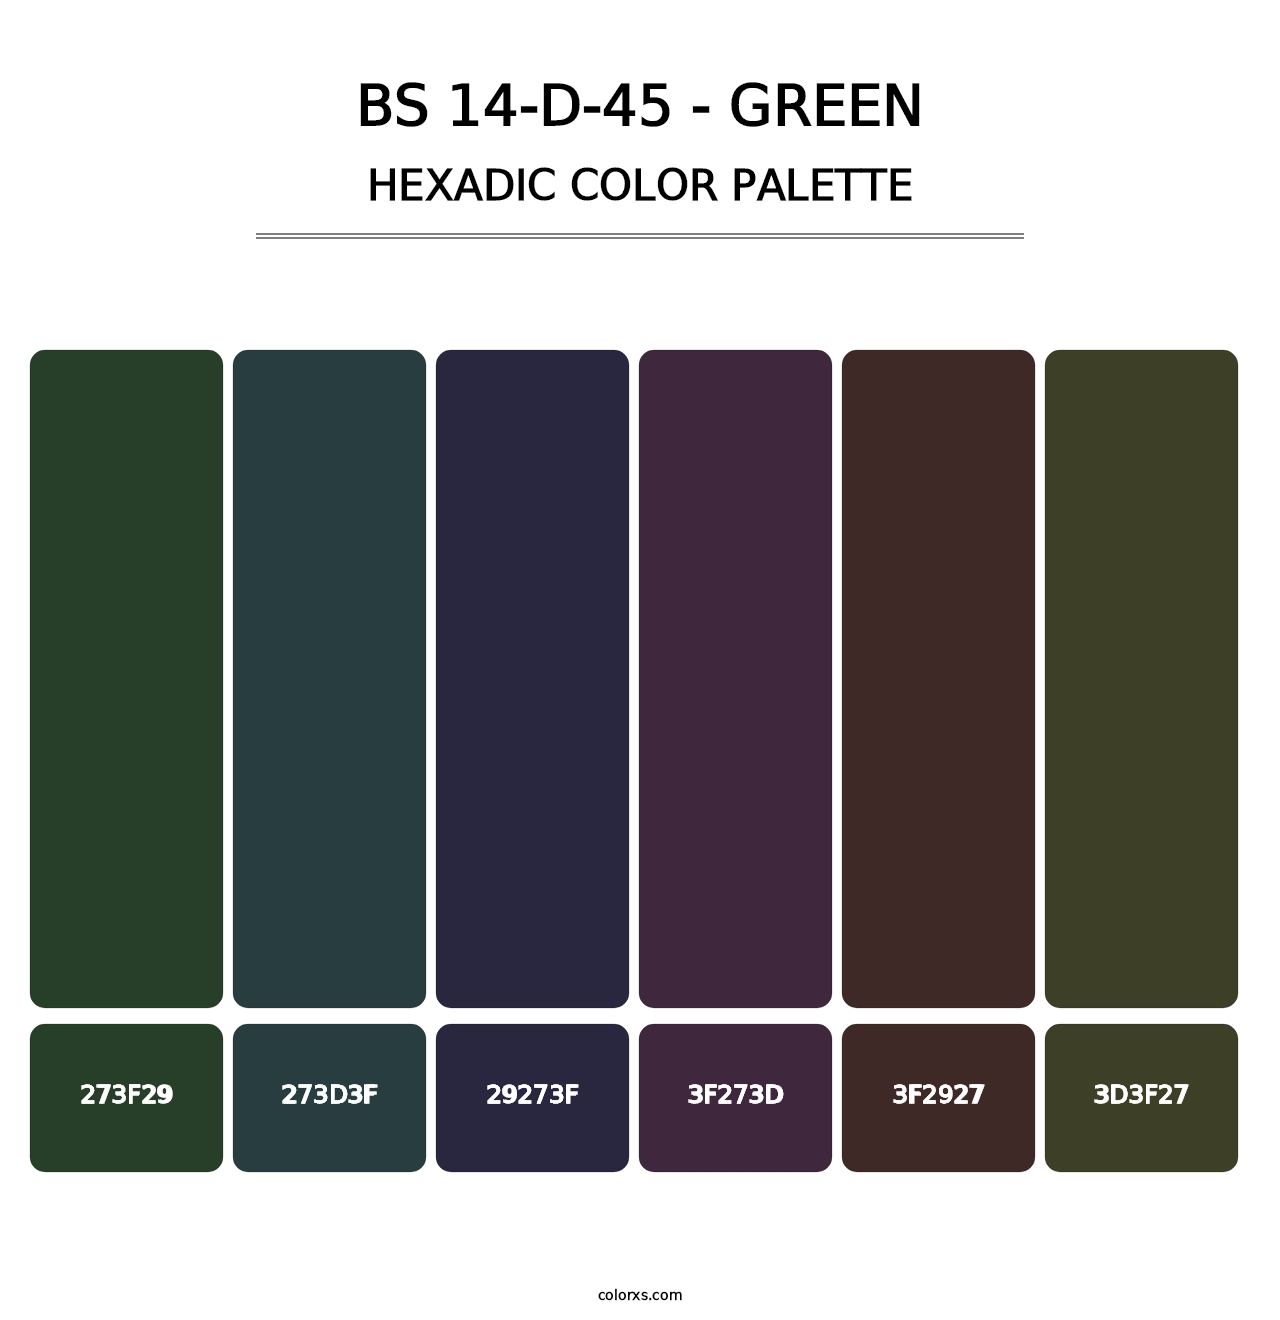 BS 14-D-45 - Green - Hexadic Color Palette